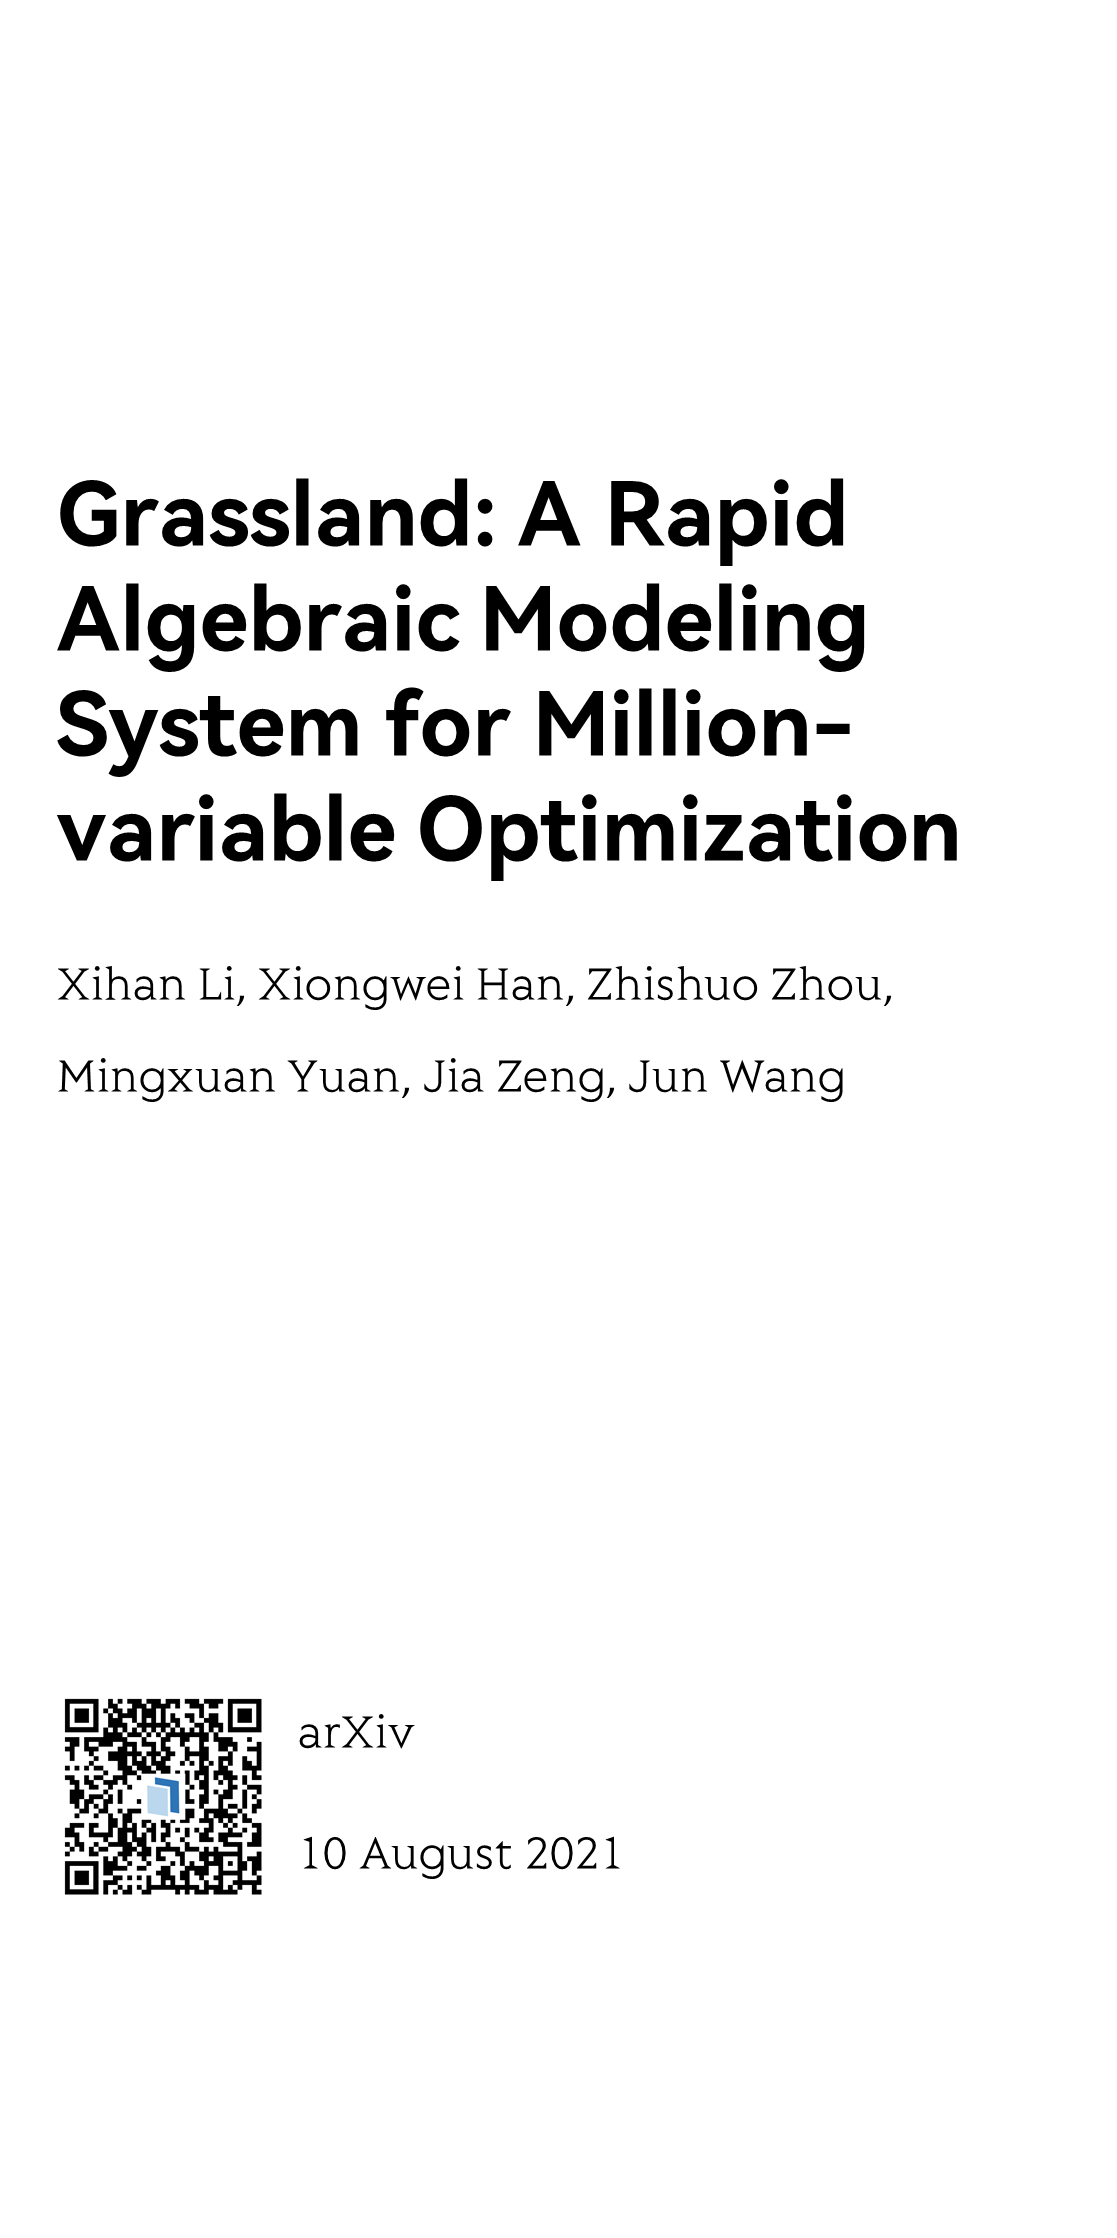 Grassland: A Rapid Algebraic Modeling System for Million-variable Optimization_1